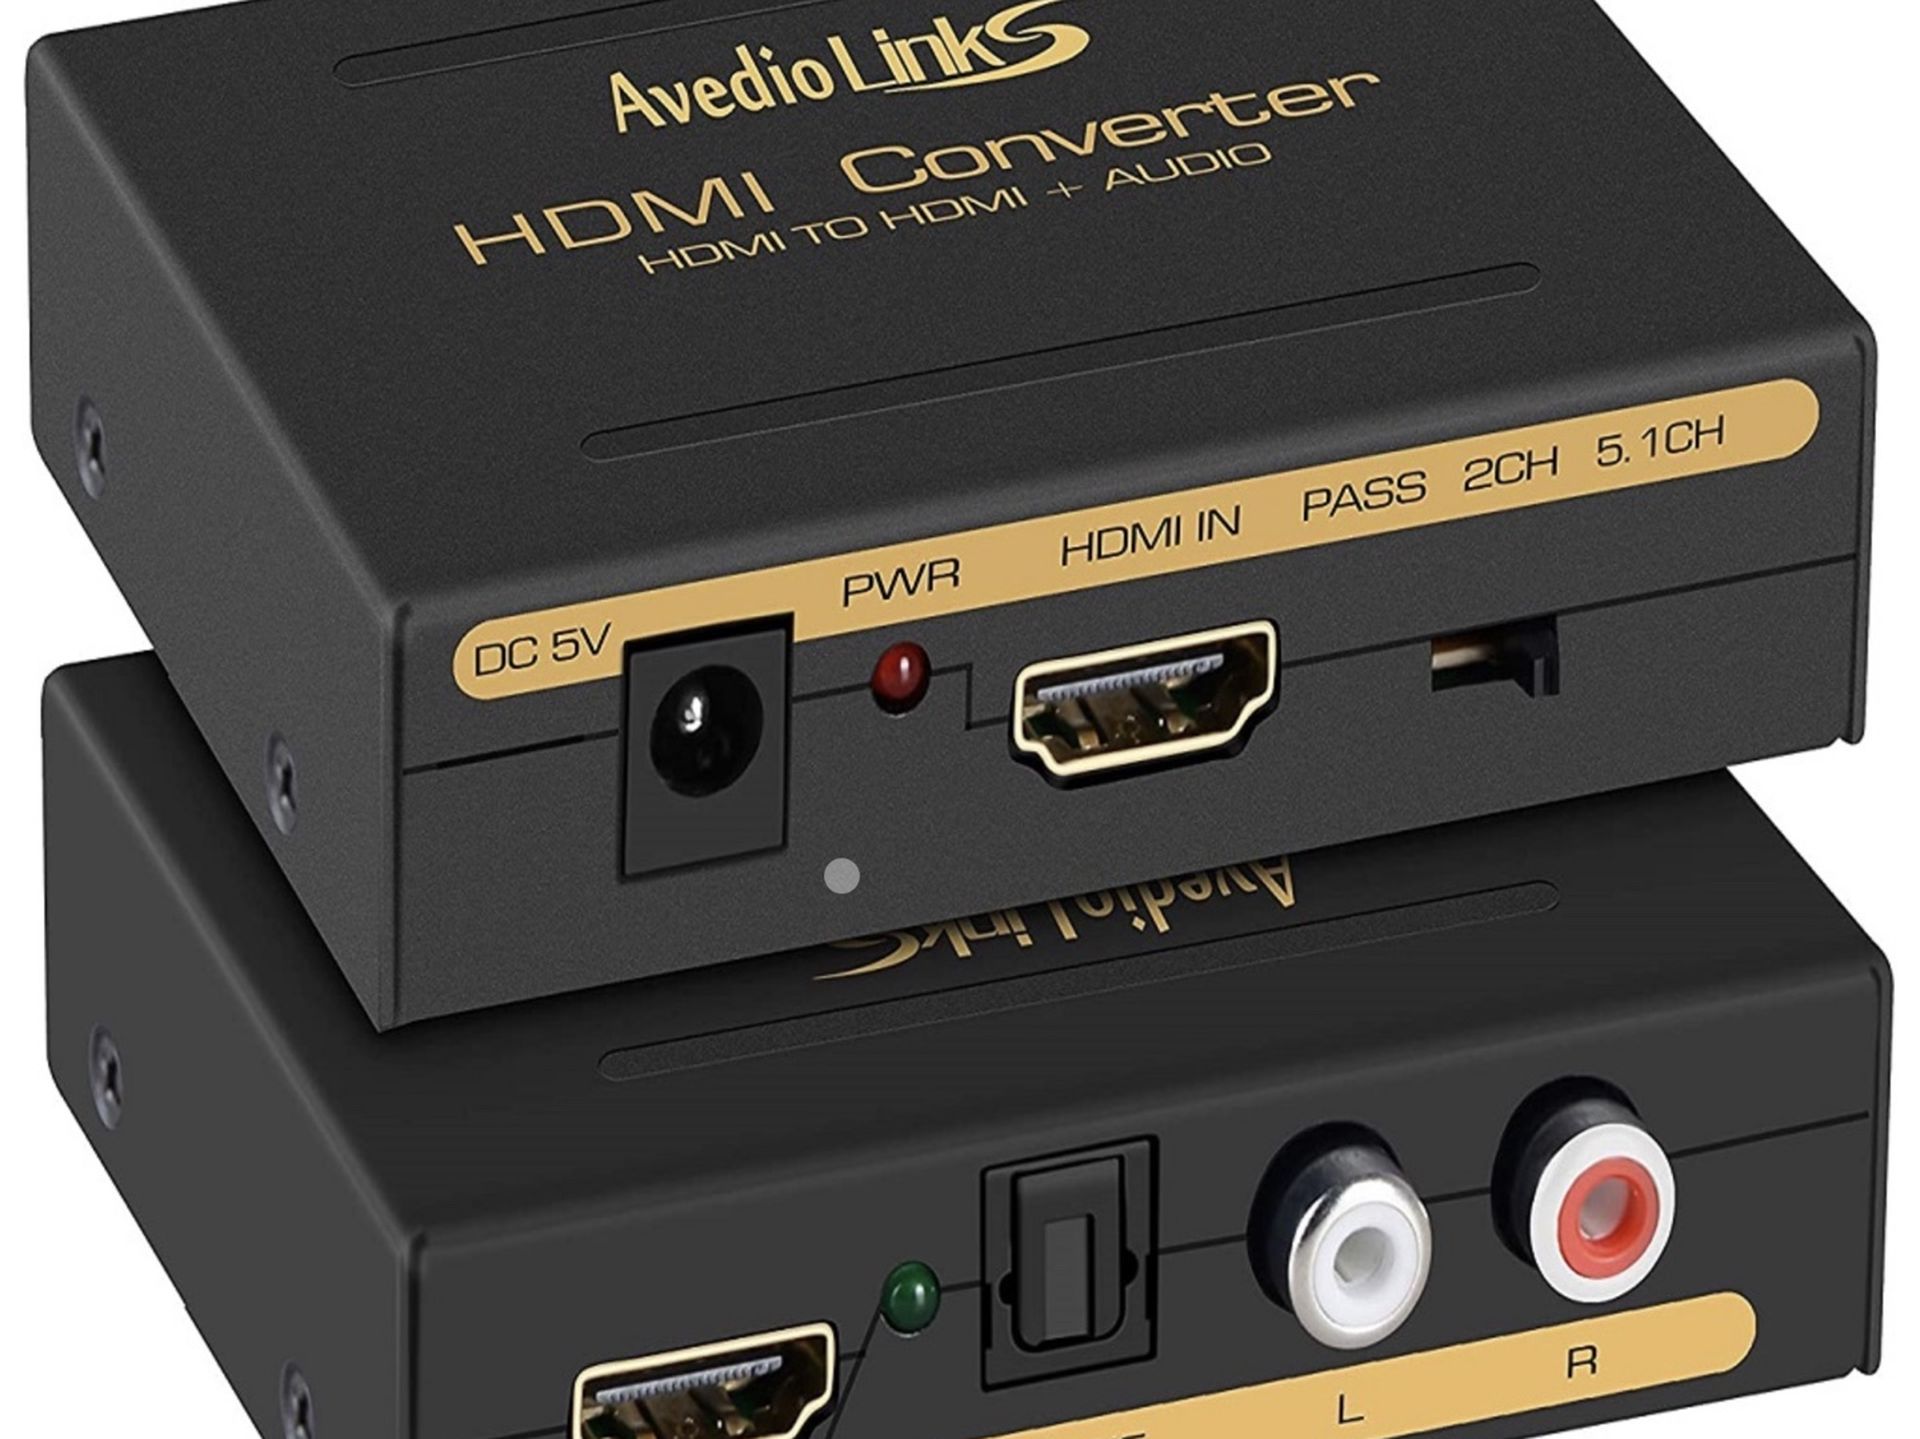 HDMI Audio Extractor Splitter, avedio links 1080P HDMI to HDMI Audio Converter + Optical Toslink SPDIF + RCA L/R Stereo Analog Audio,